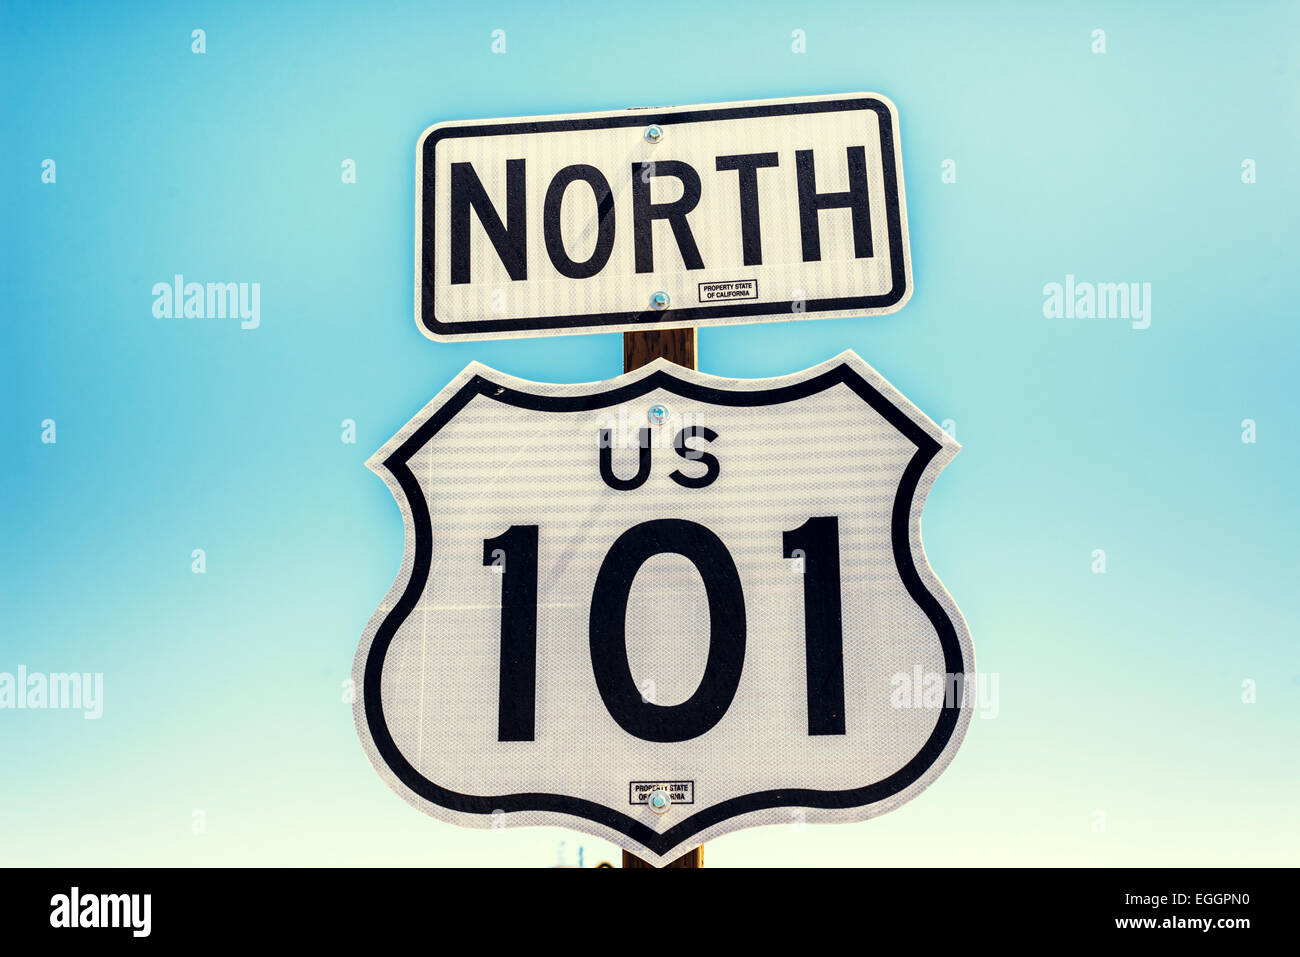 u s highway 101 road sign california united